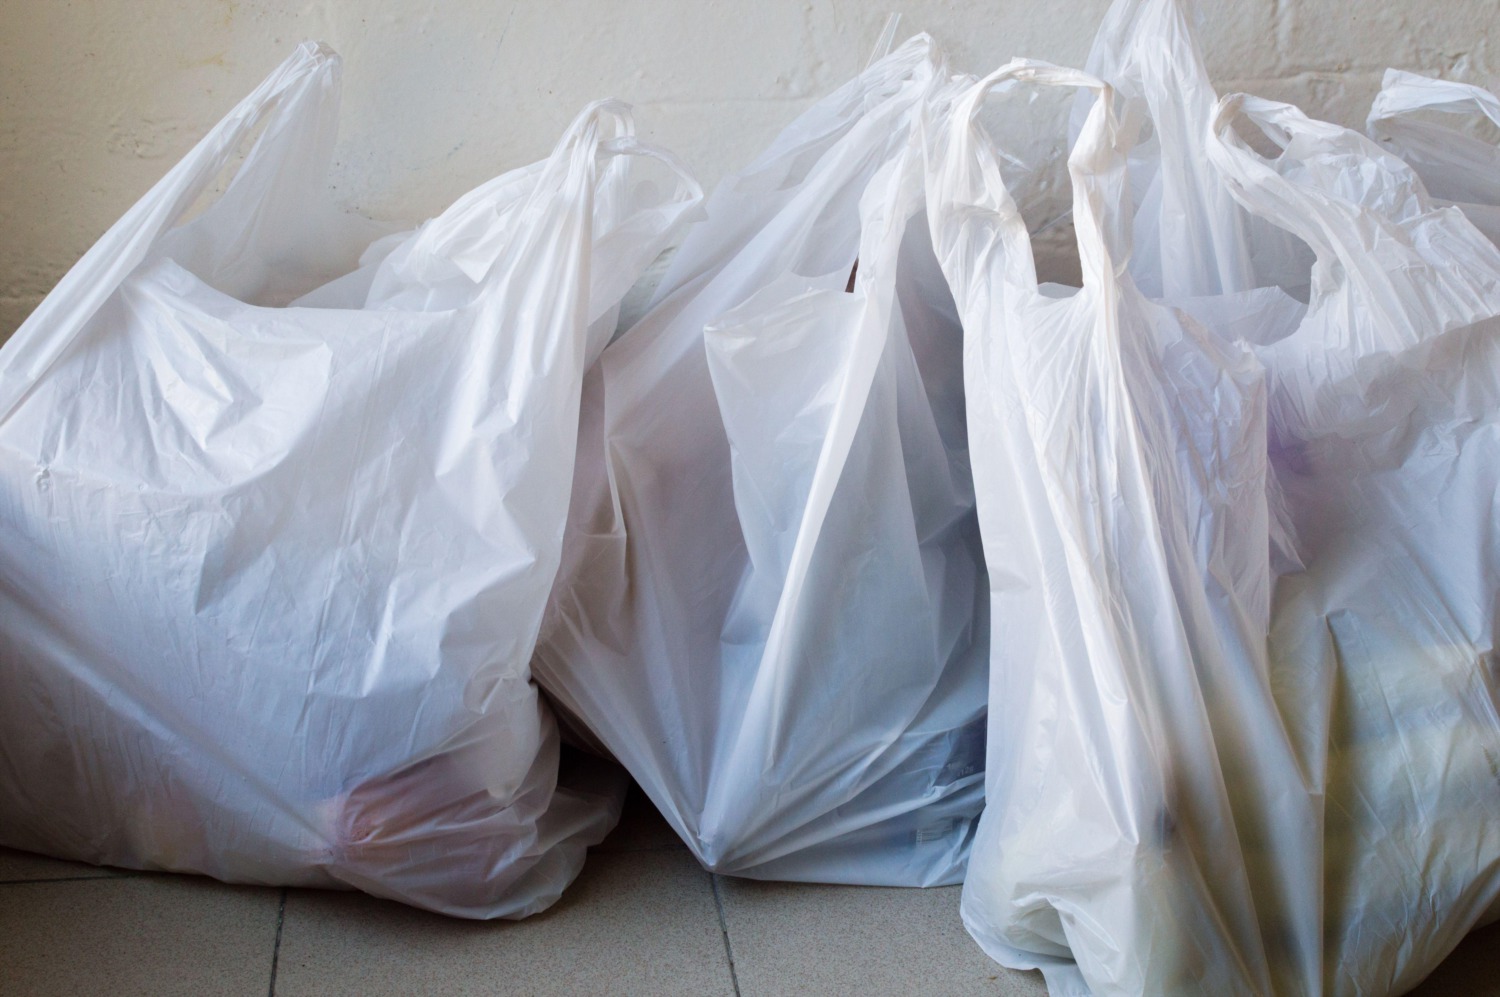 Quincy Joins Over 120 Communities in Massachusetts to Ban Plastic Bags